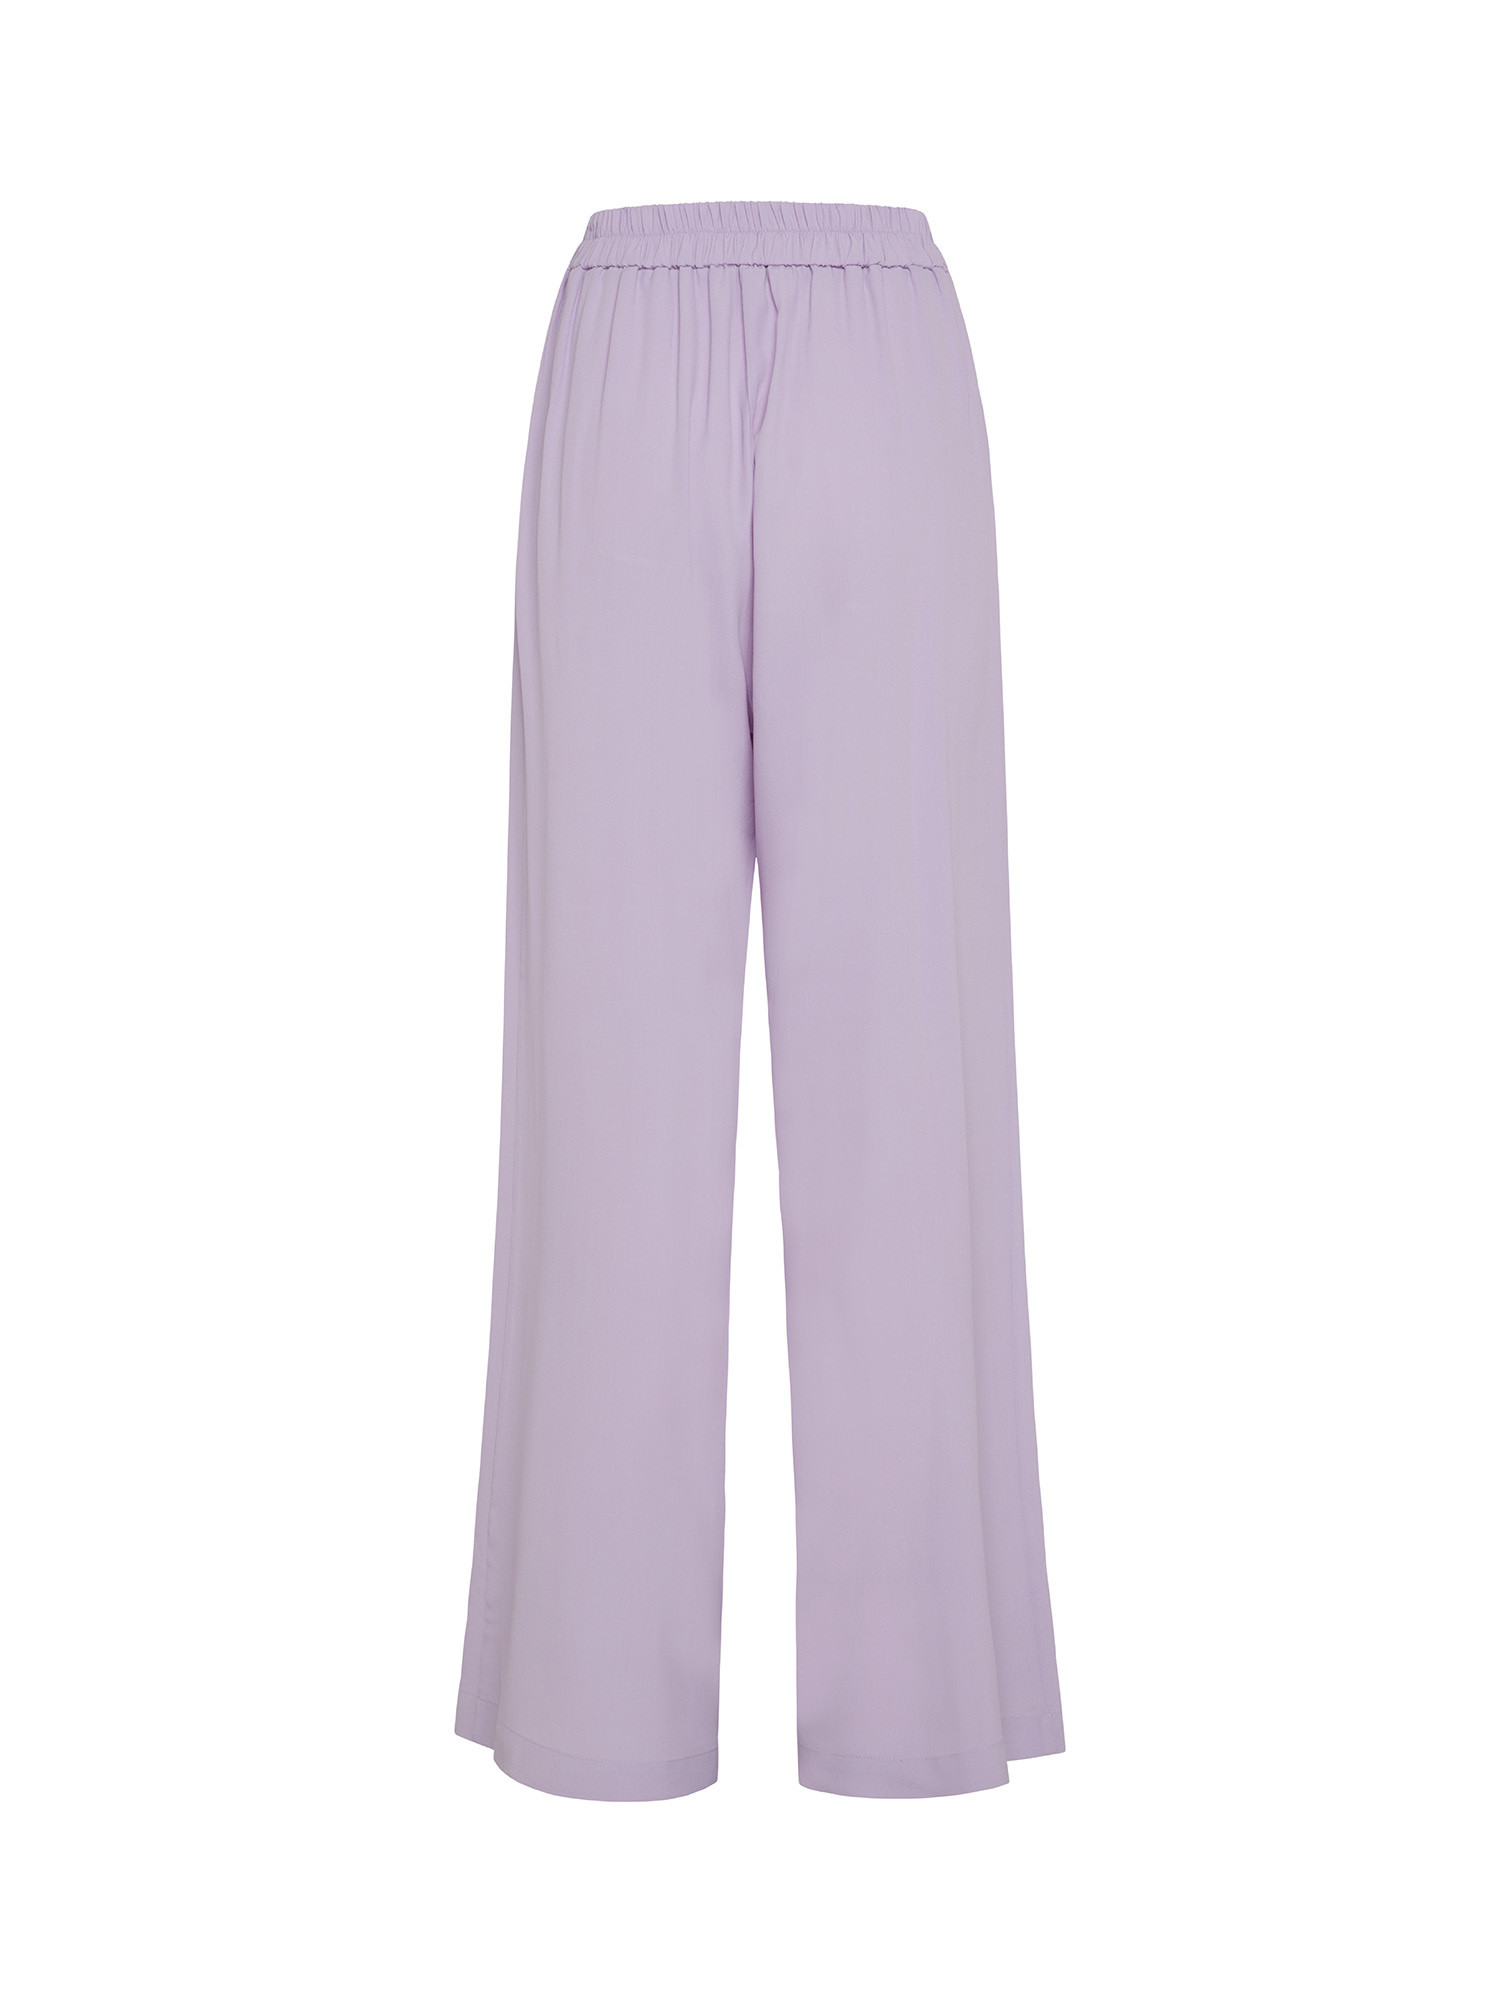 Momonì - Aspen pants in cràªpe-silk blend, Purple Wisteria, large image number 1